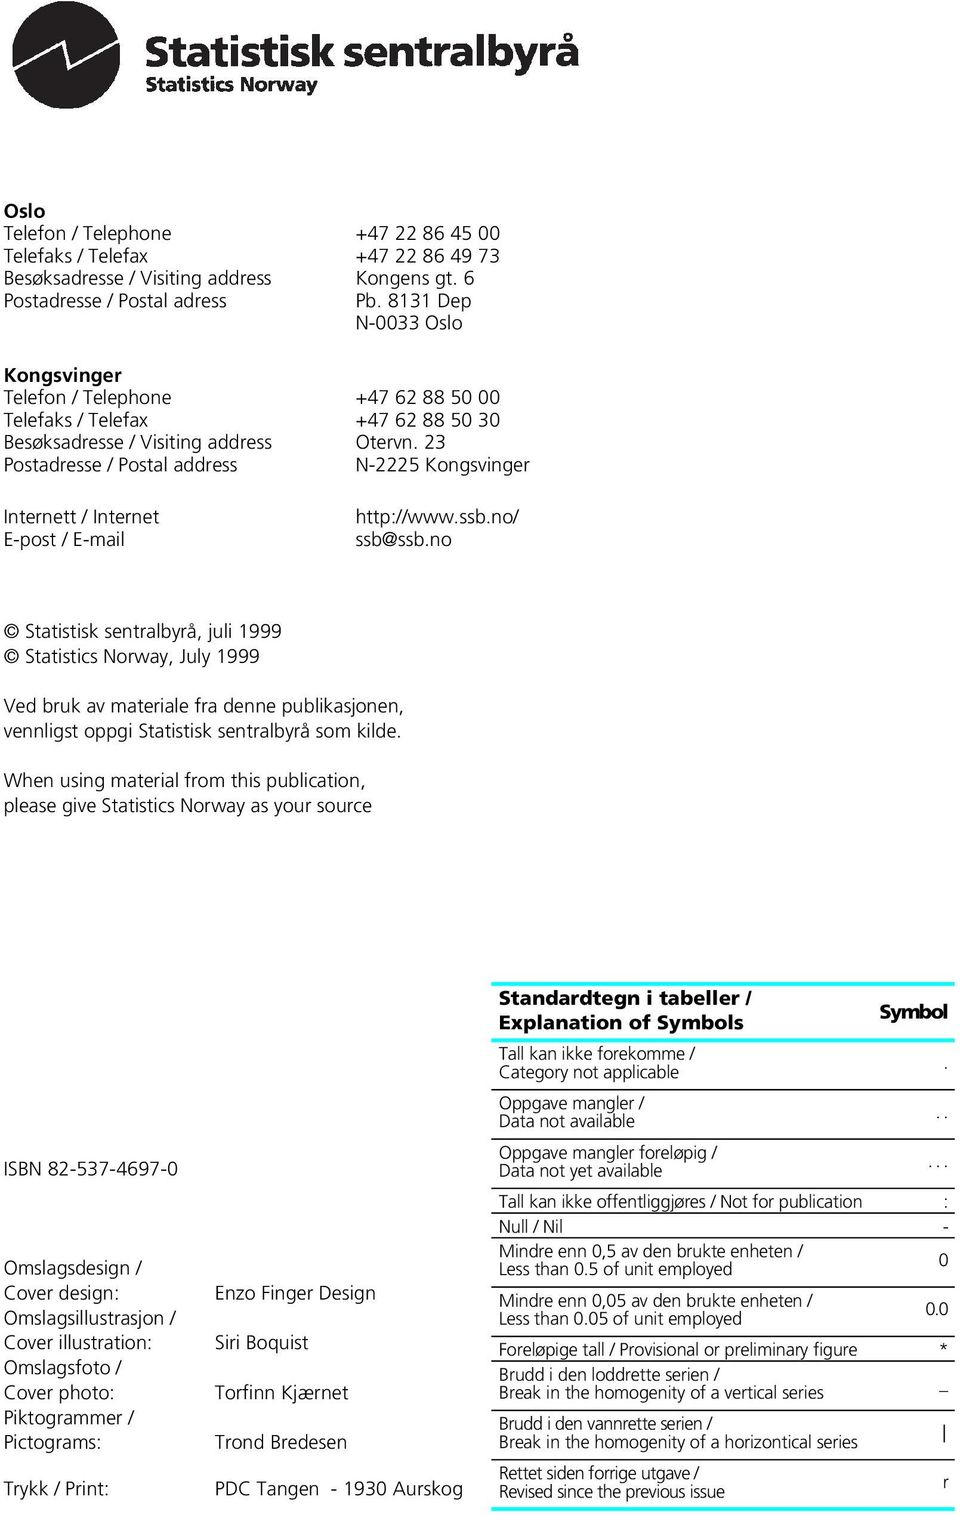 23 Postadresse / Postal address N-2225 Kongsvinger Internett / Internet E-post / E-mail http://www.ssb.no/ ssb@ssb.